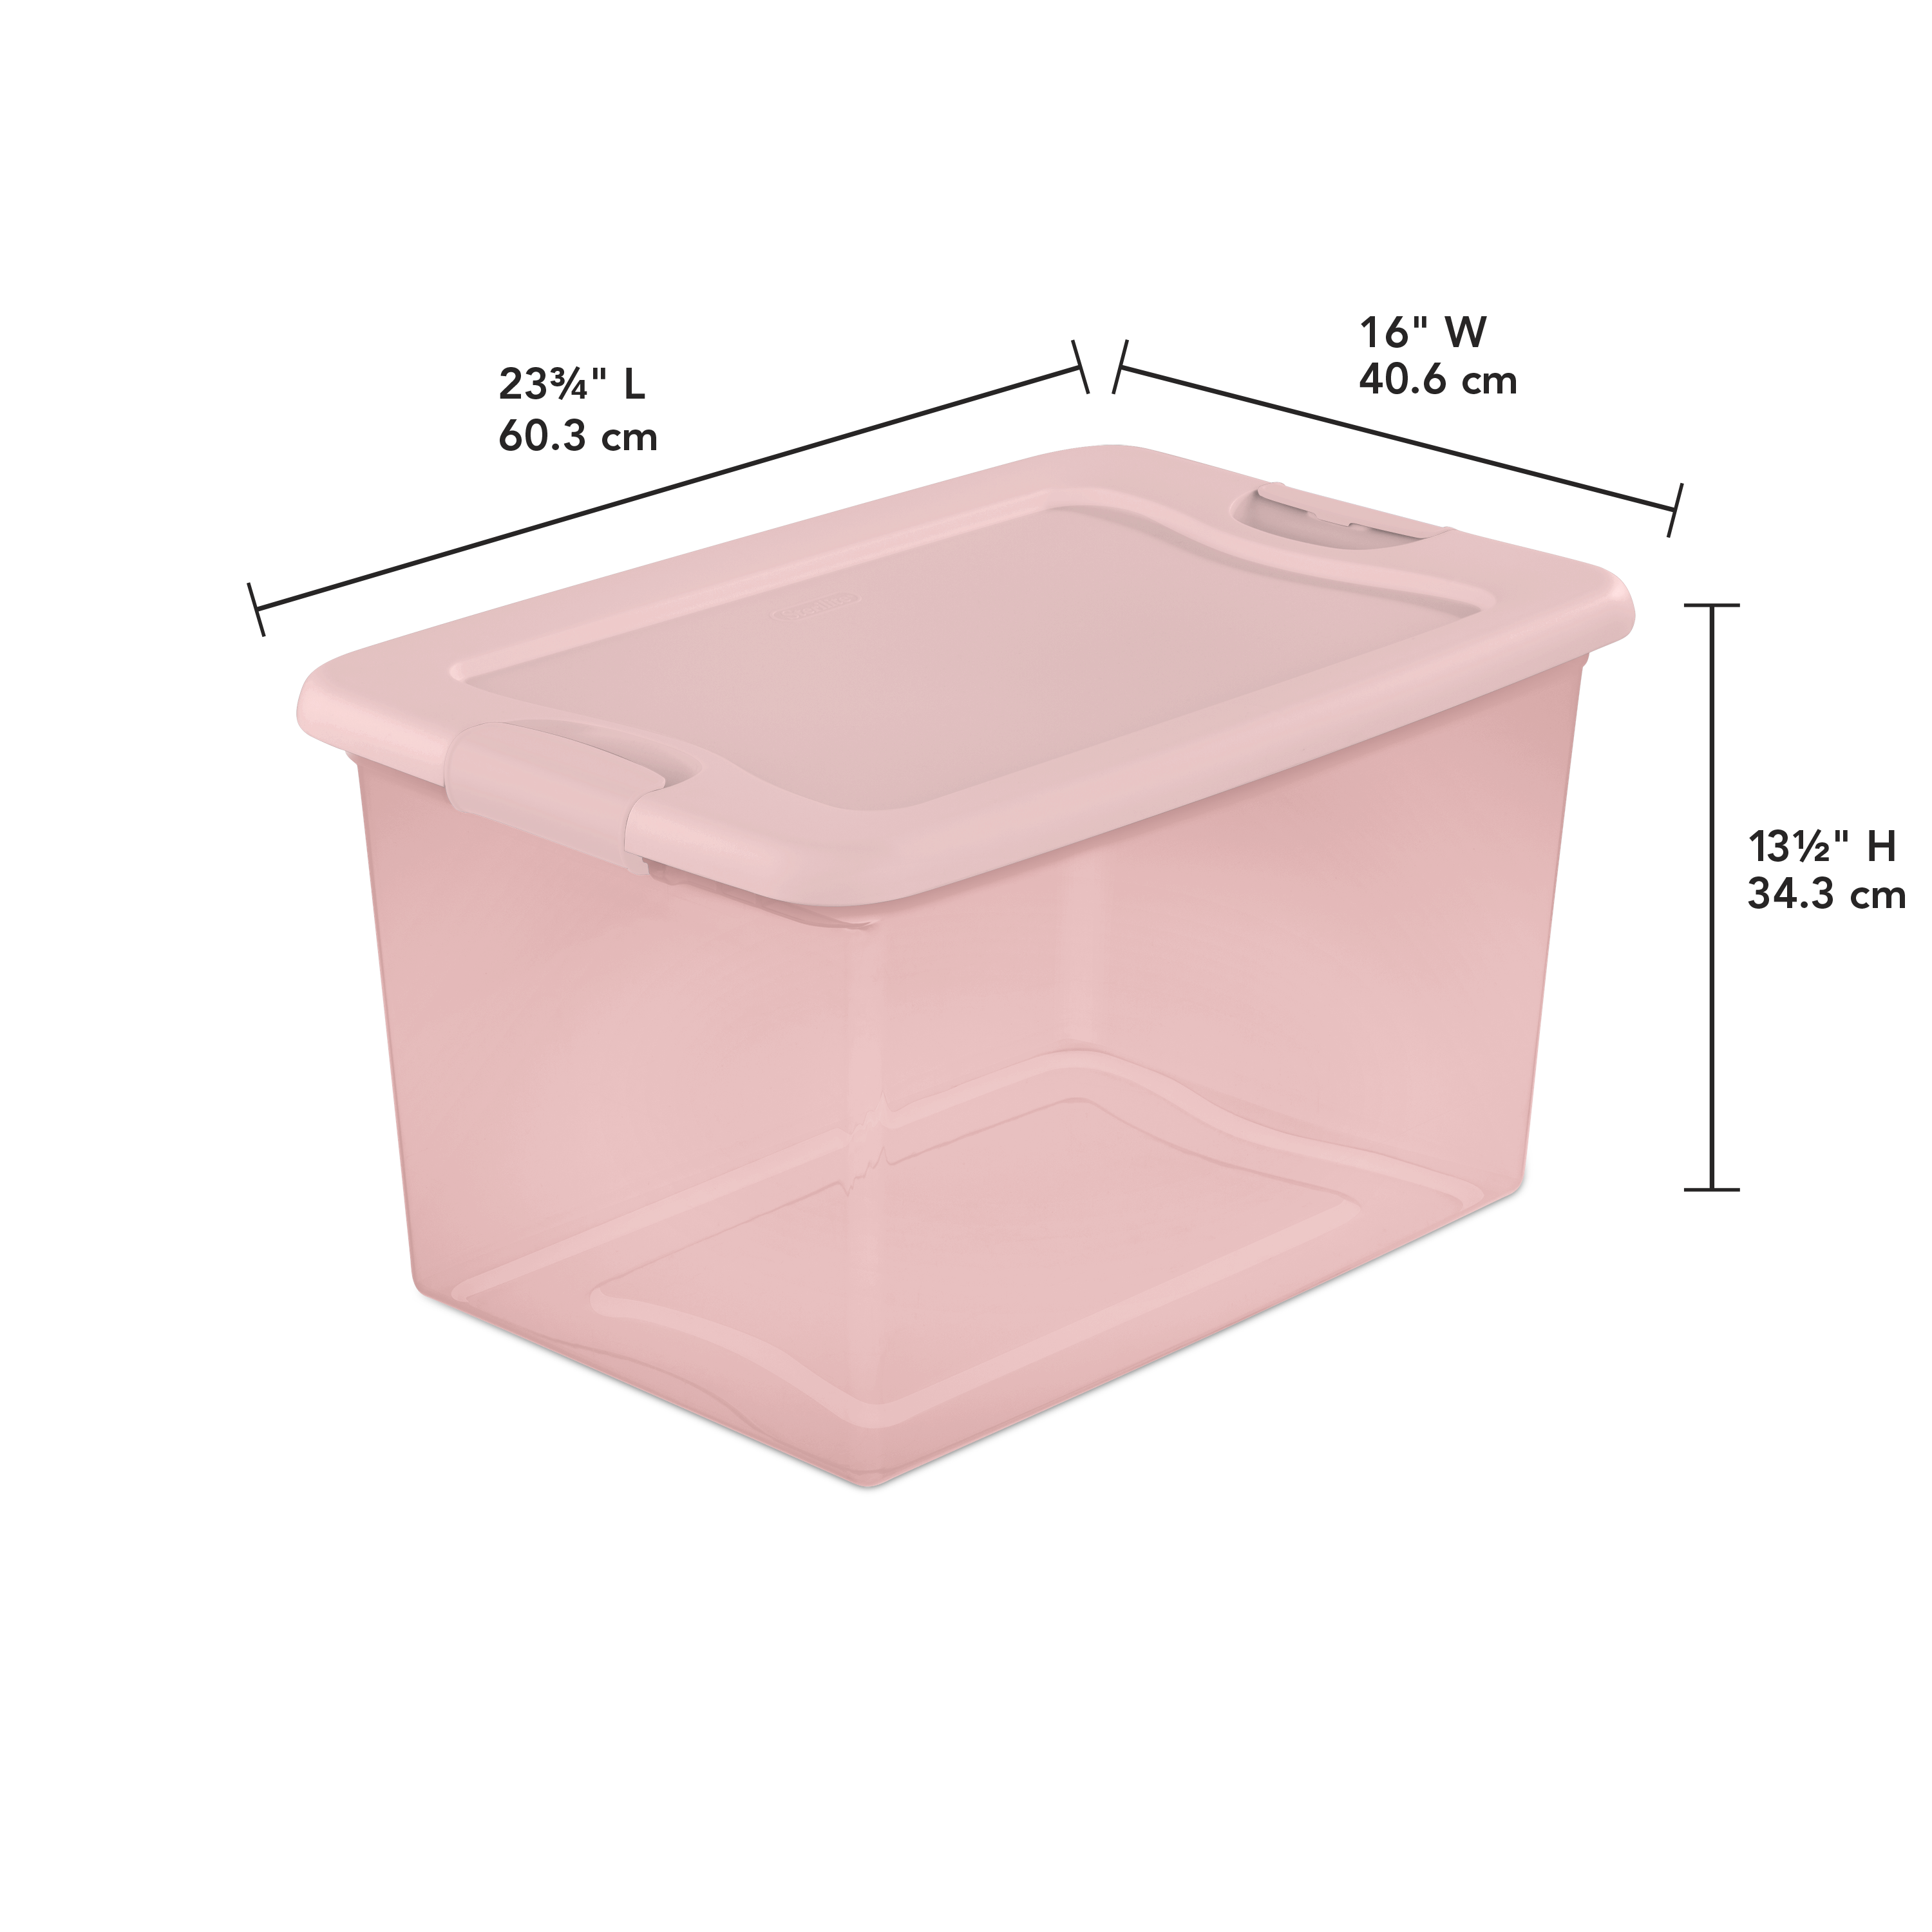 Sterilite 64 Qt. Latching Box Plastic, Blush Pink Tint, Set of 6 - image 4 of 5